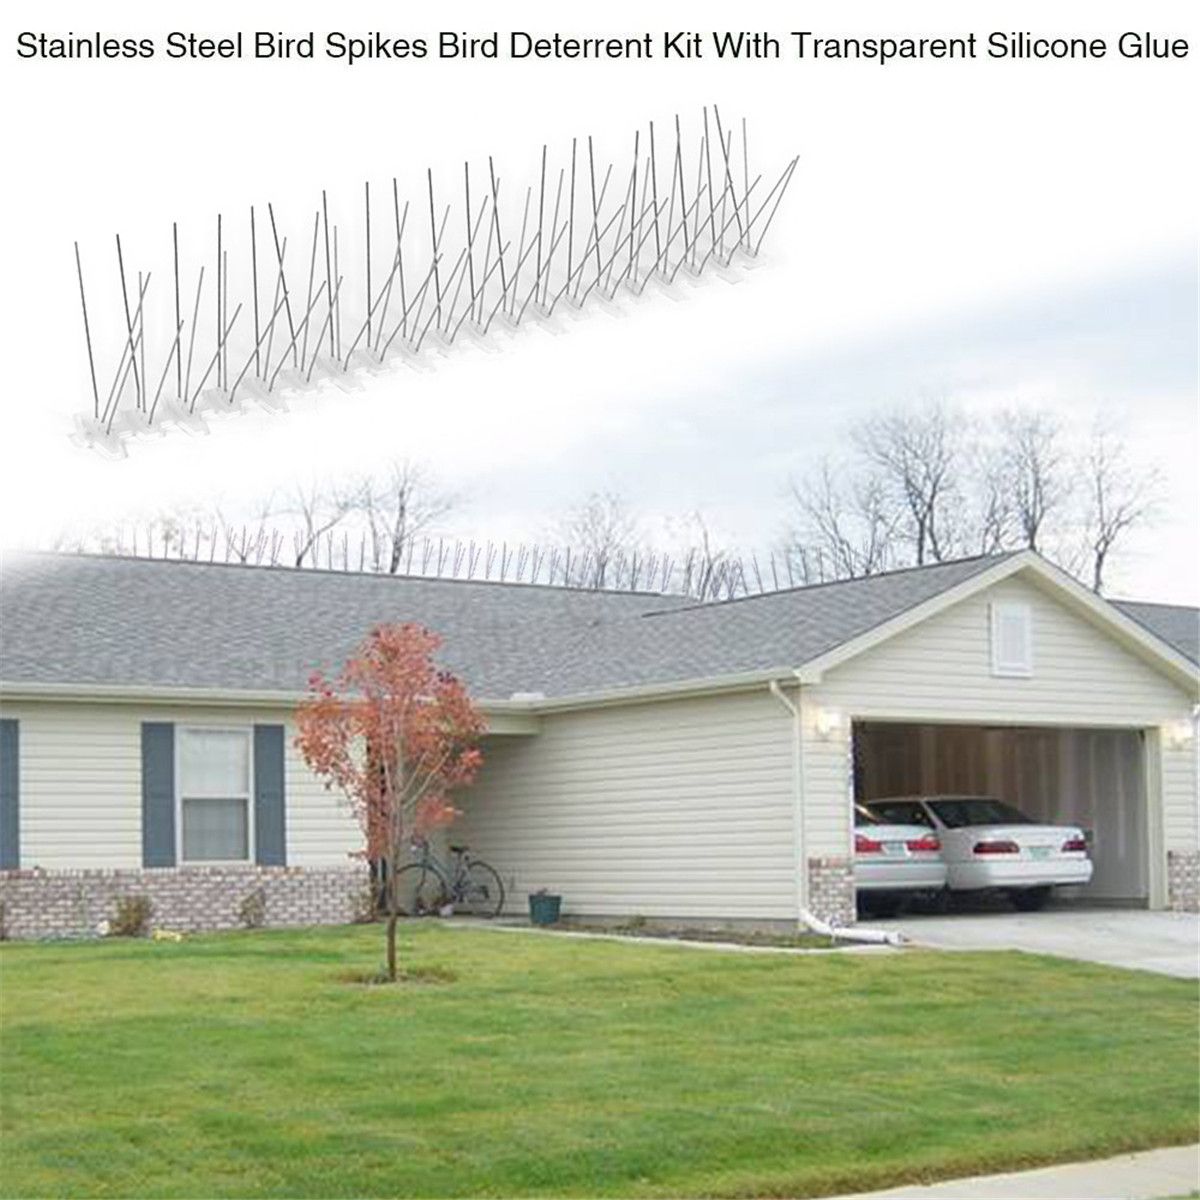 10pcs-30cm-Stainless-Steel-Bird-Spikes-Pigeon-Deterrent-Home-Gardening-Repellent-1709179